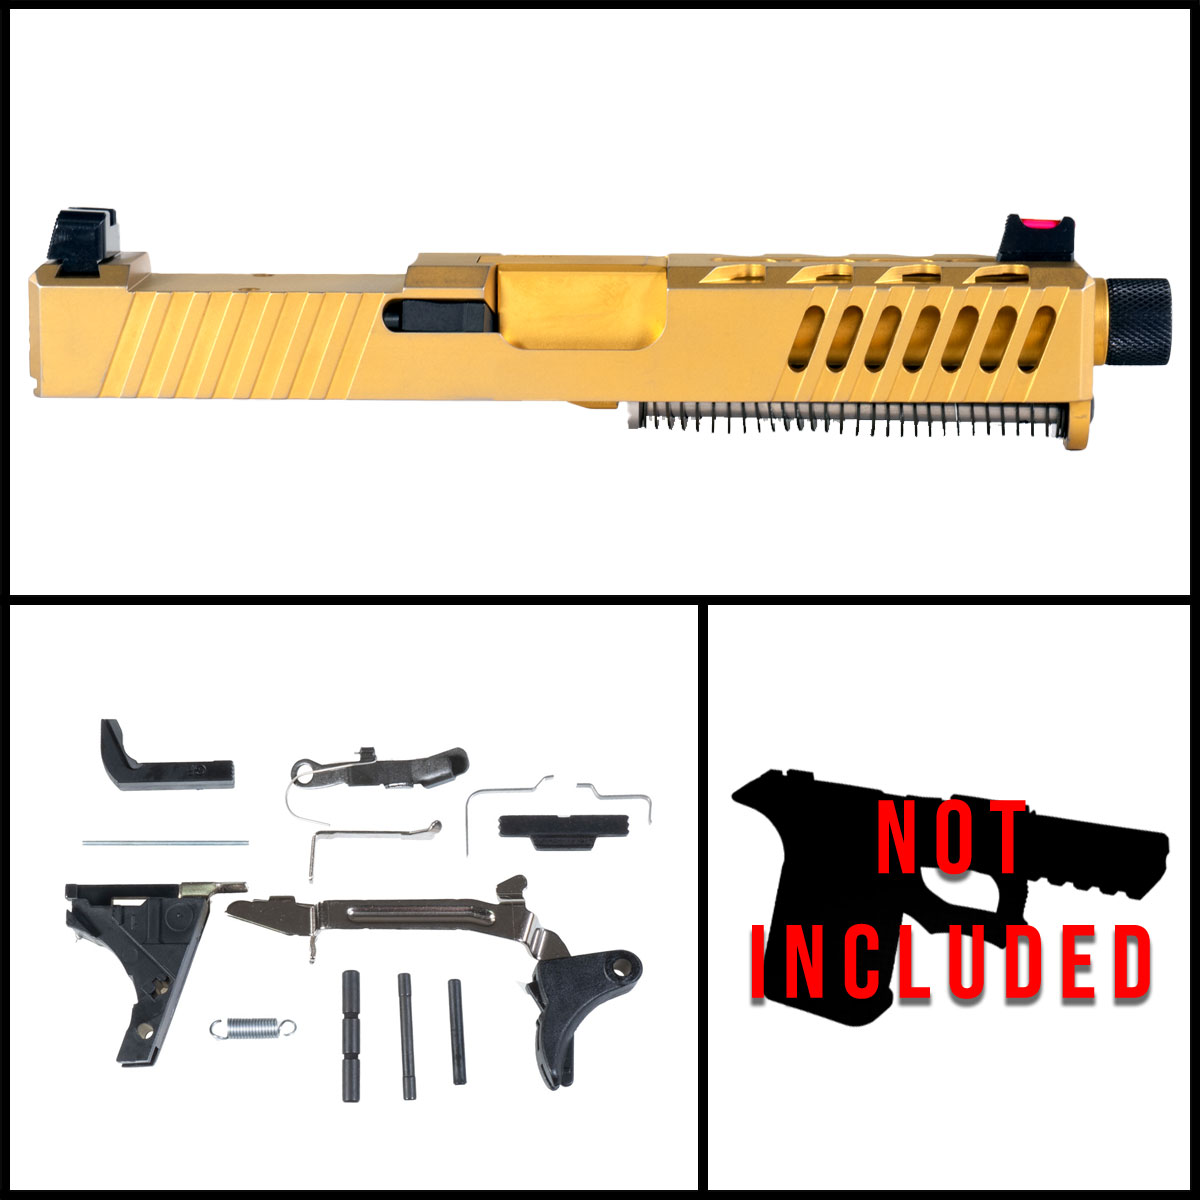 DDS 'AU-197' 9mm Full Pistol Build Kit (Everything Minus Frame) - Glock 19 Compatible